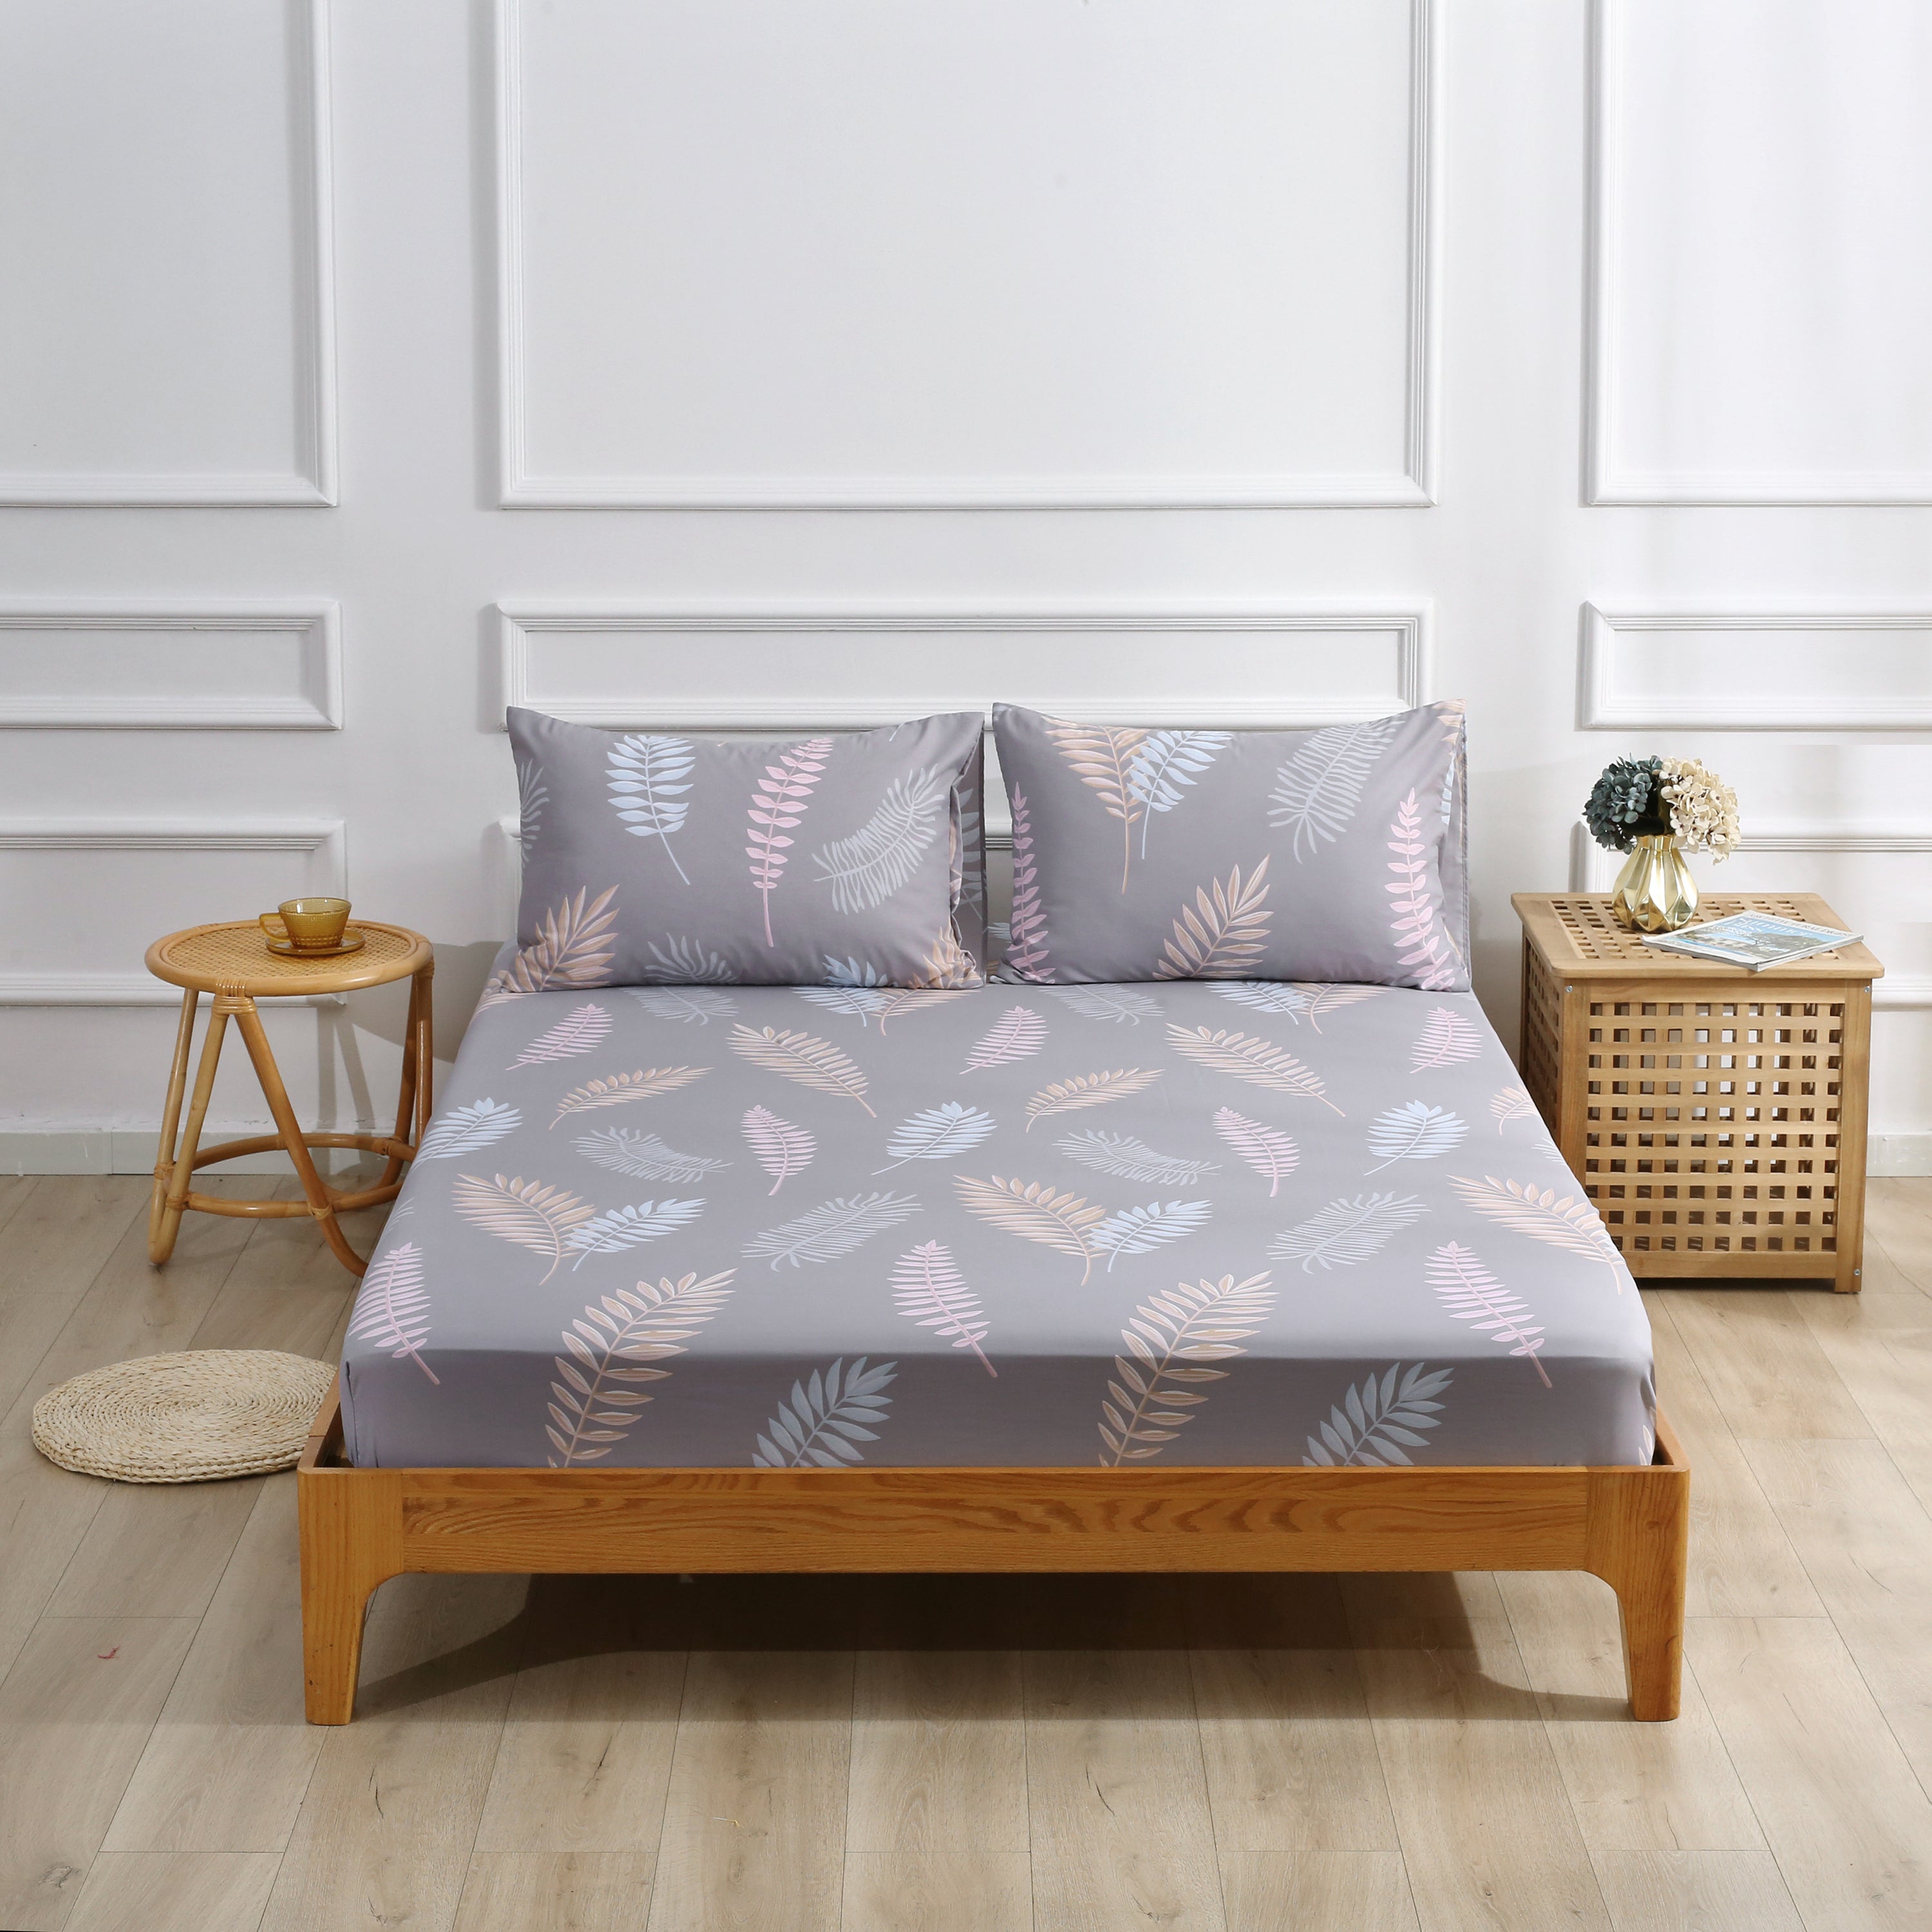 Simple Ol' Me TENCEL Bed Linen - 2100針天絲床單套裝- T02